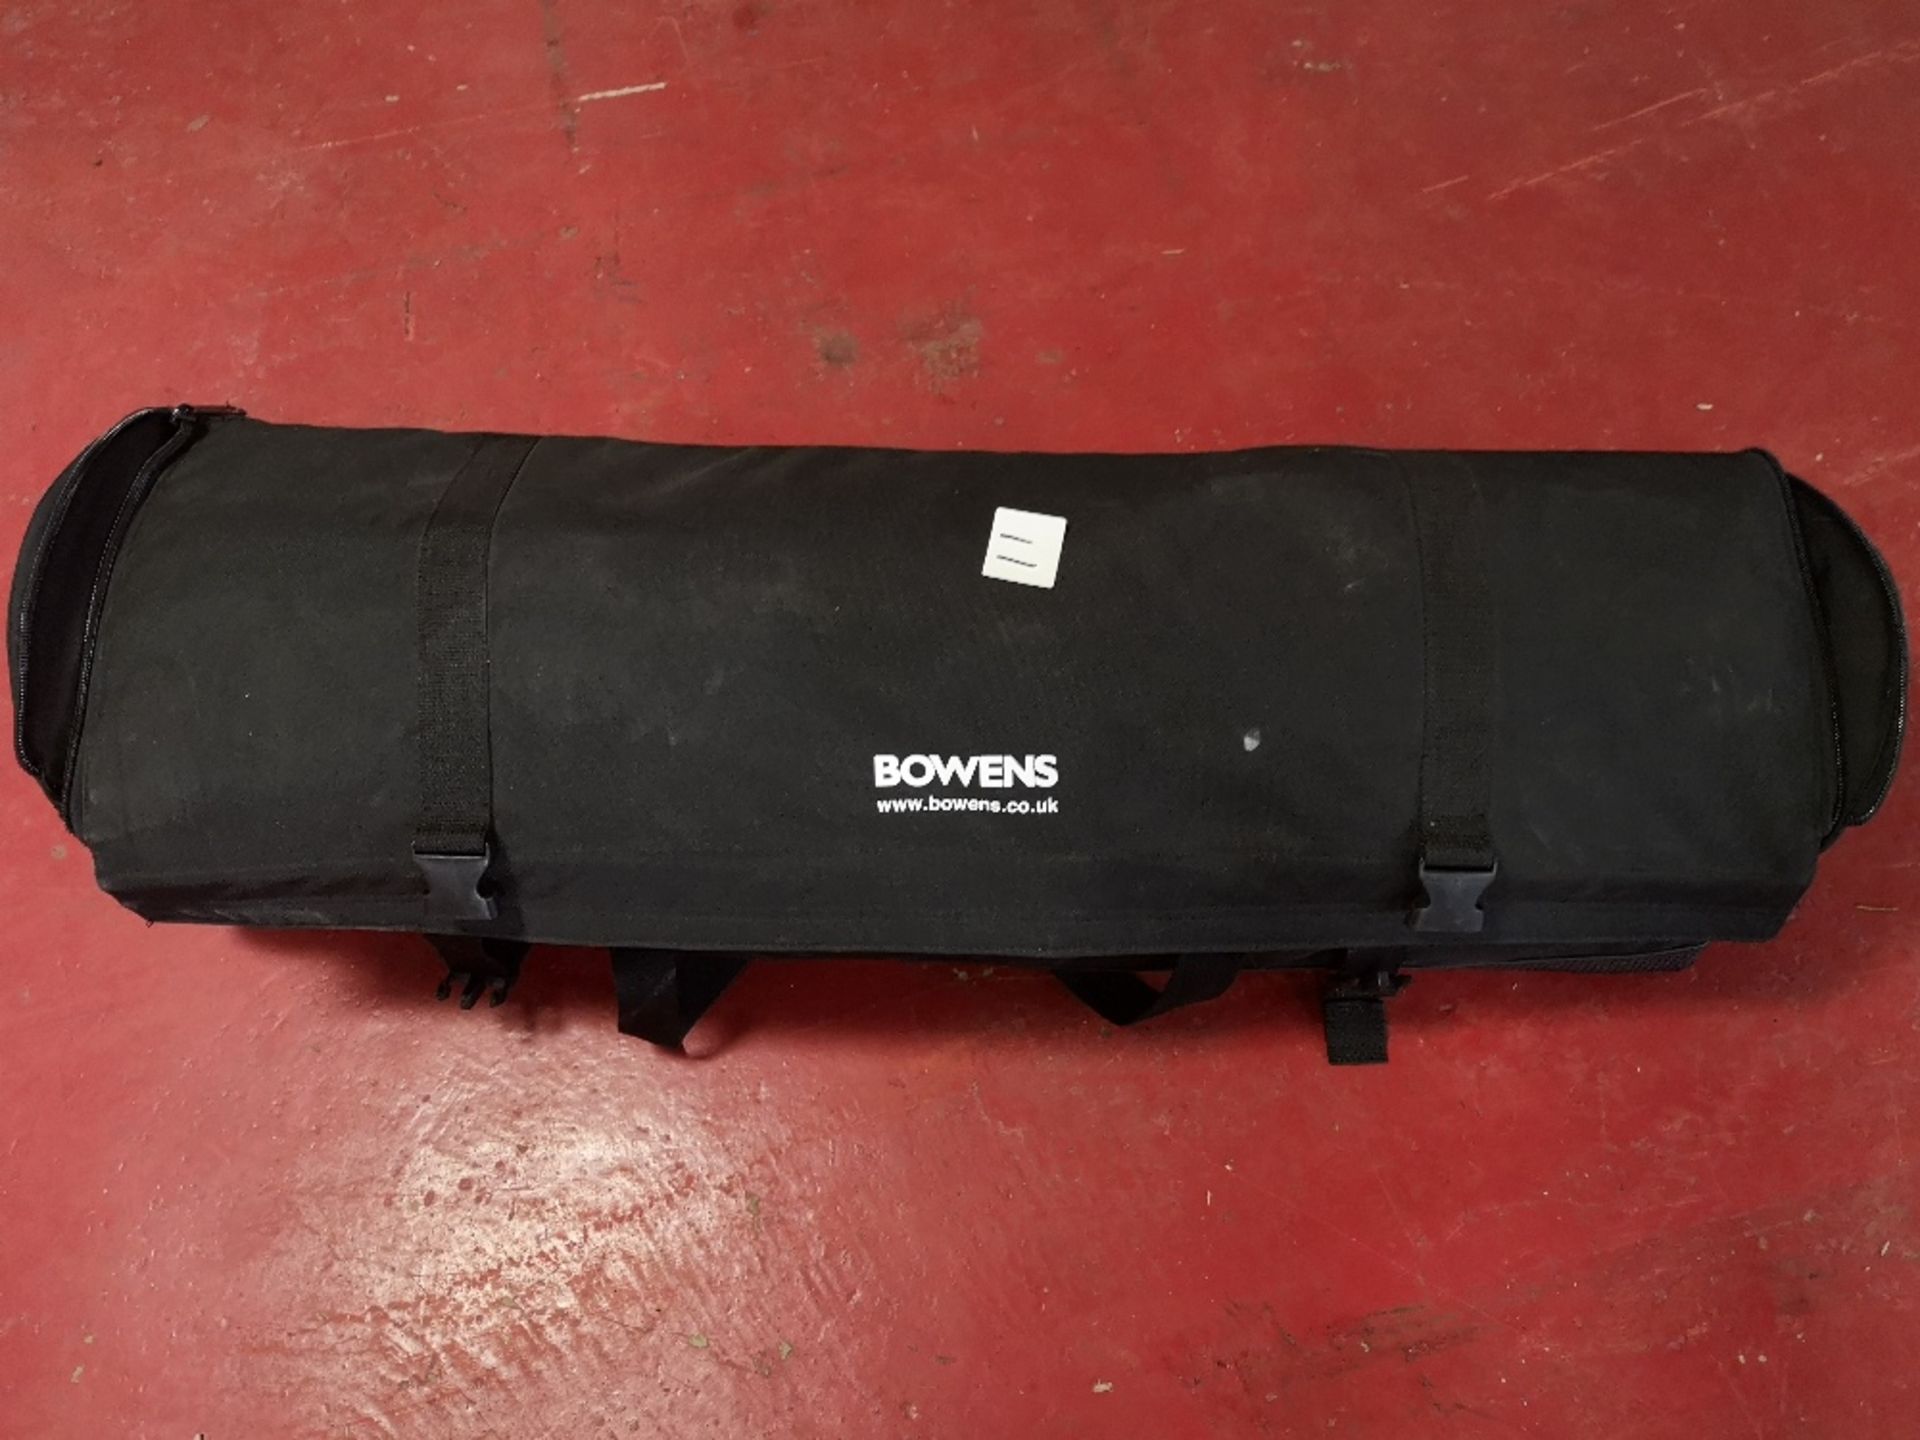 Bowens Lighting Wheelie Carry Case